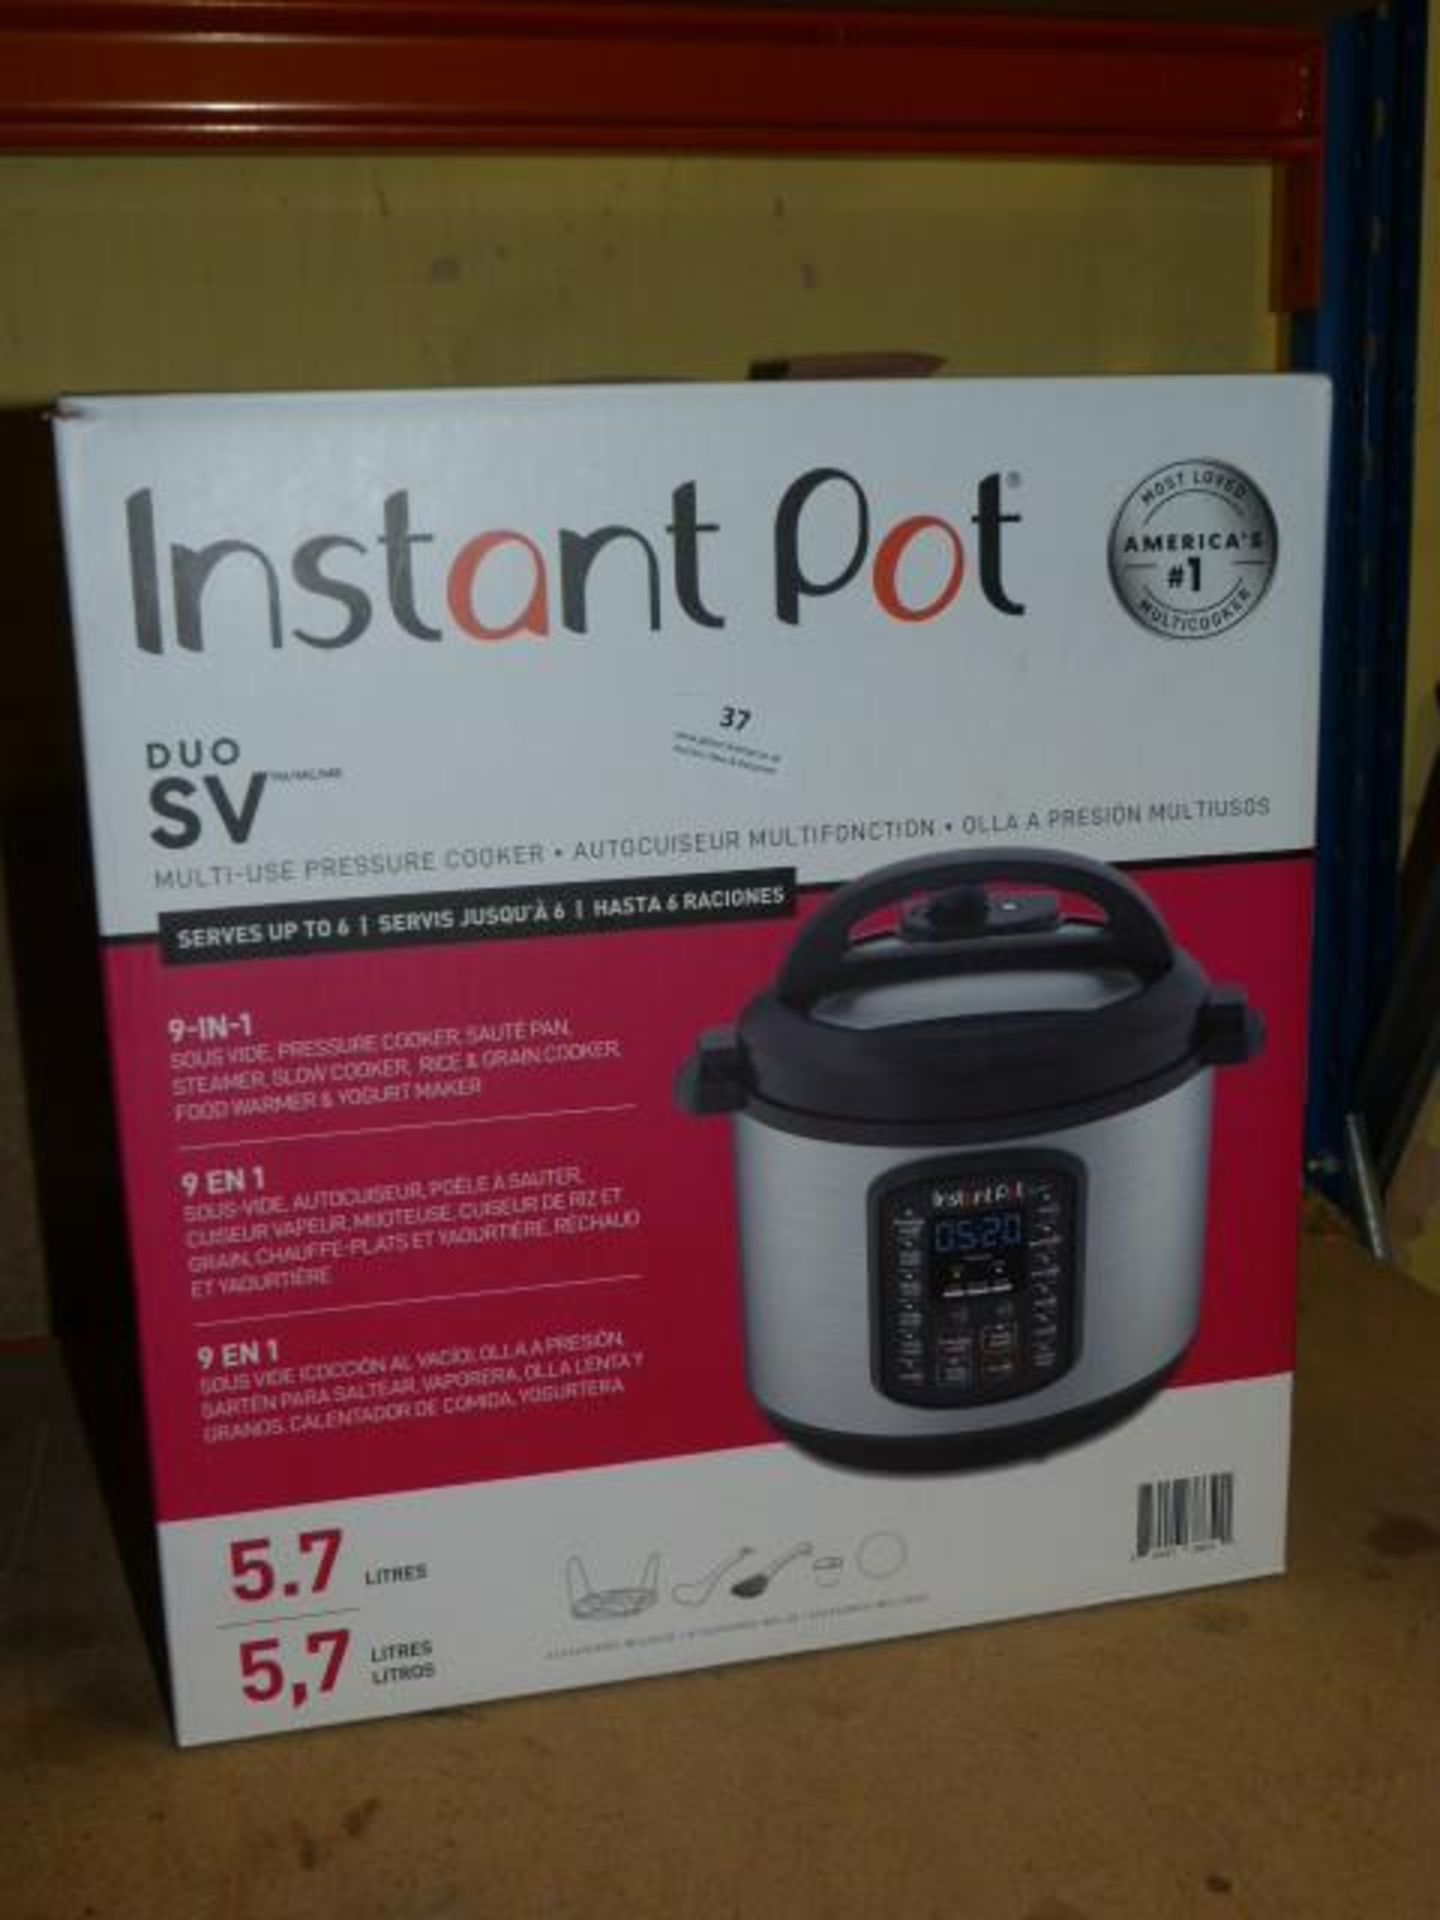 *Instant Pot Duo SV Multicooker